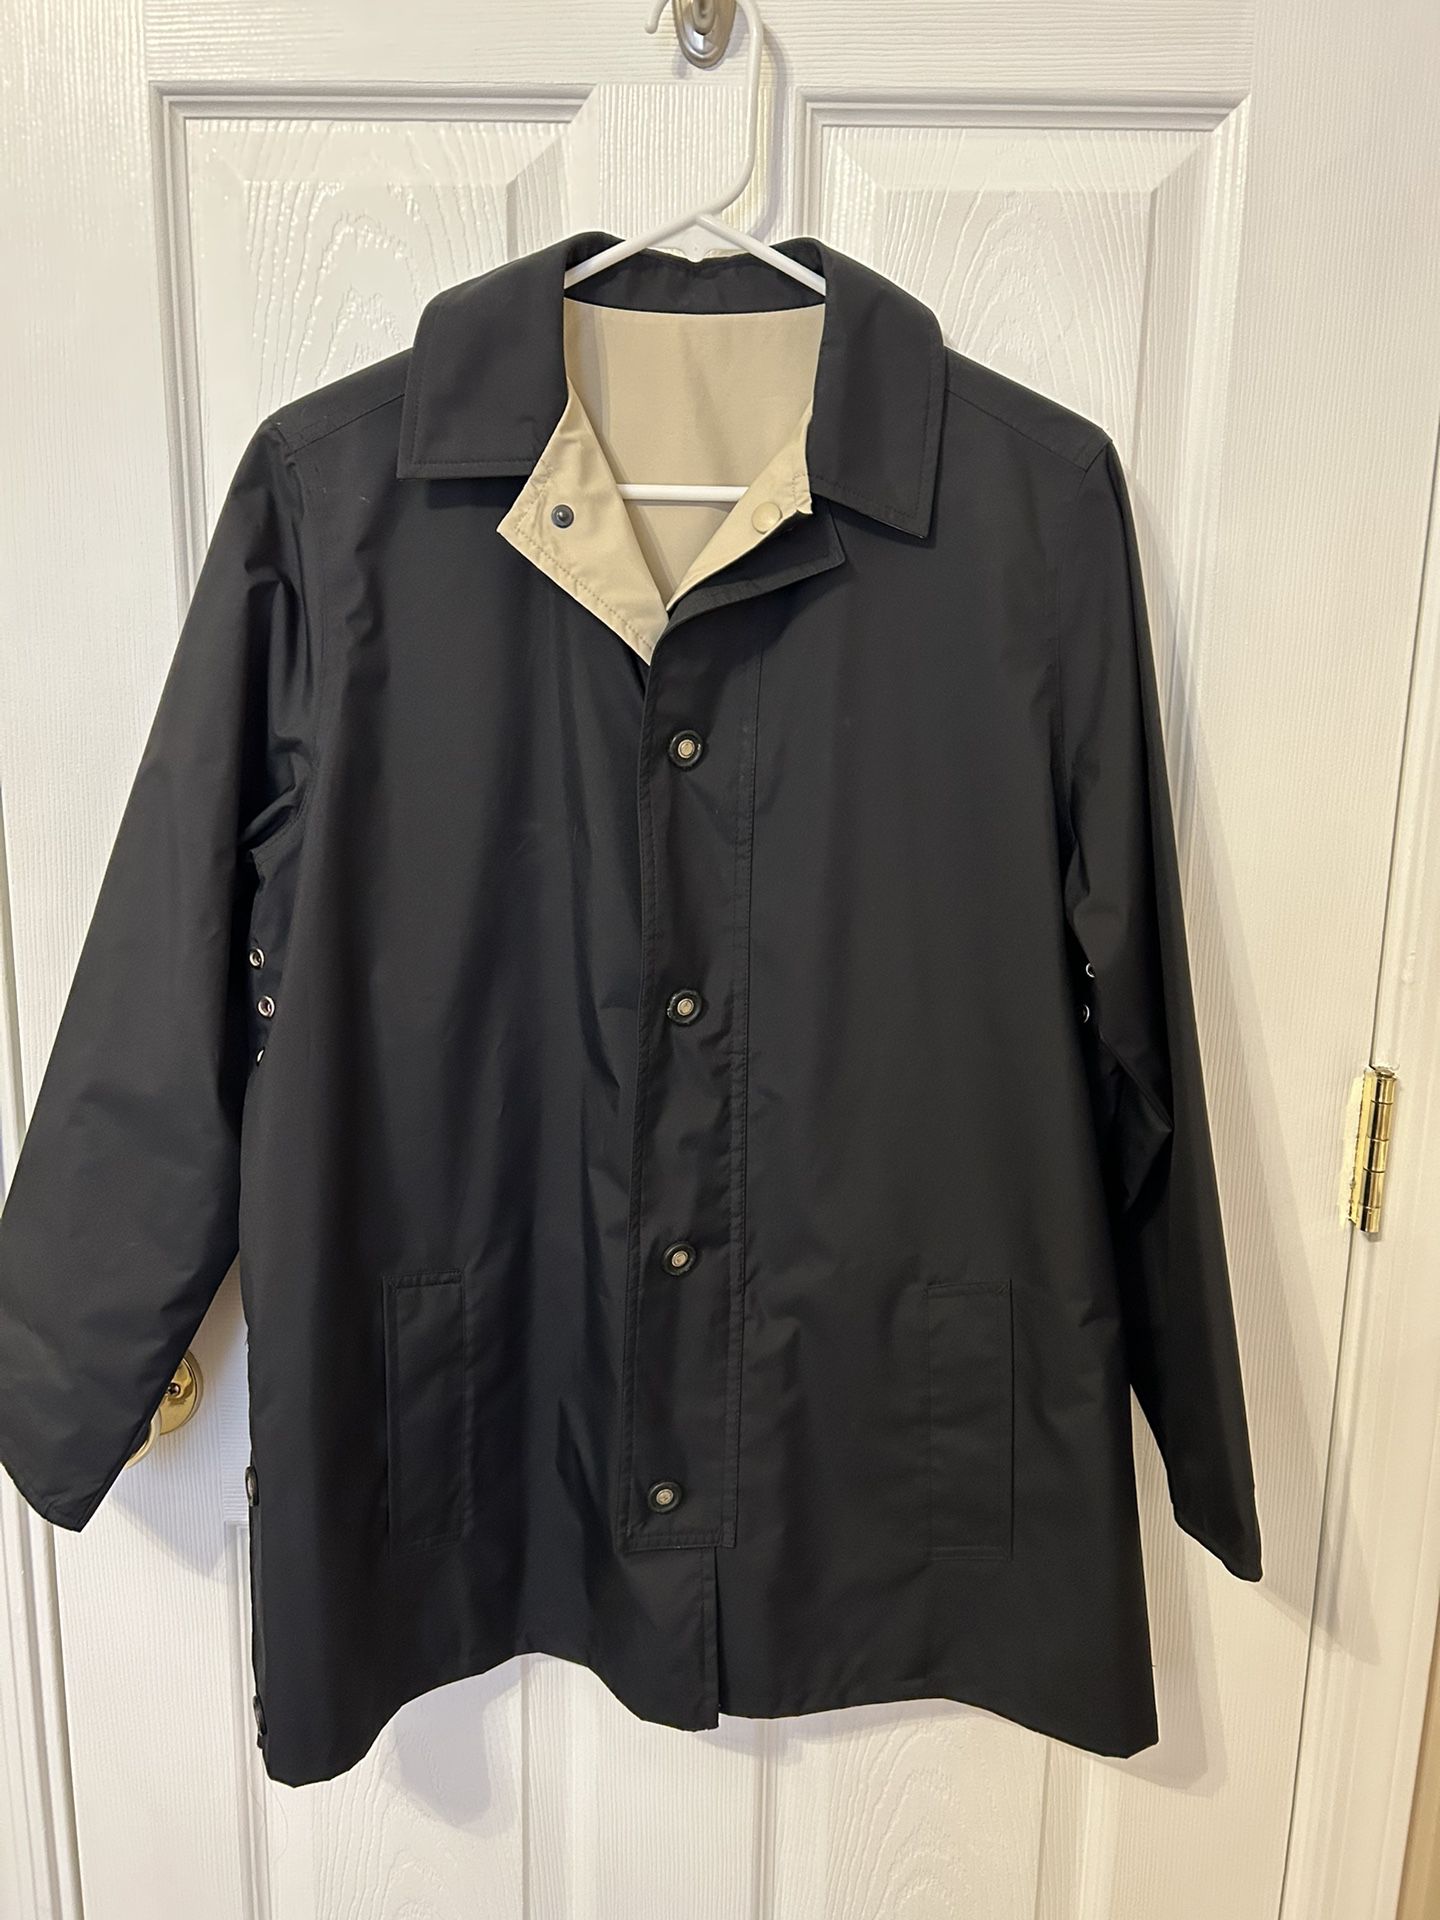 Travel Smith Reversible Black & Tan Raincoat Size Petite Medium